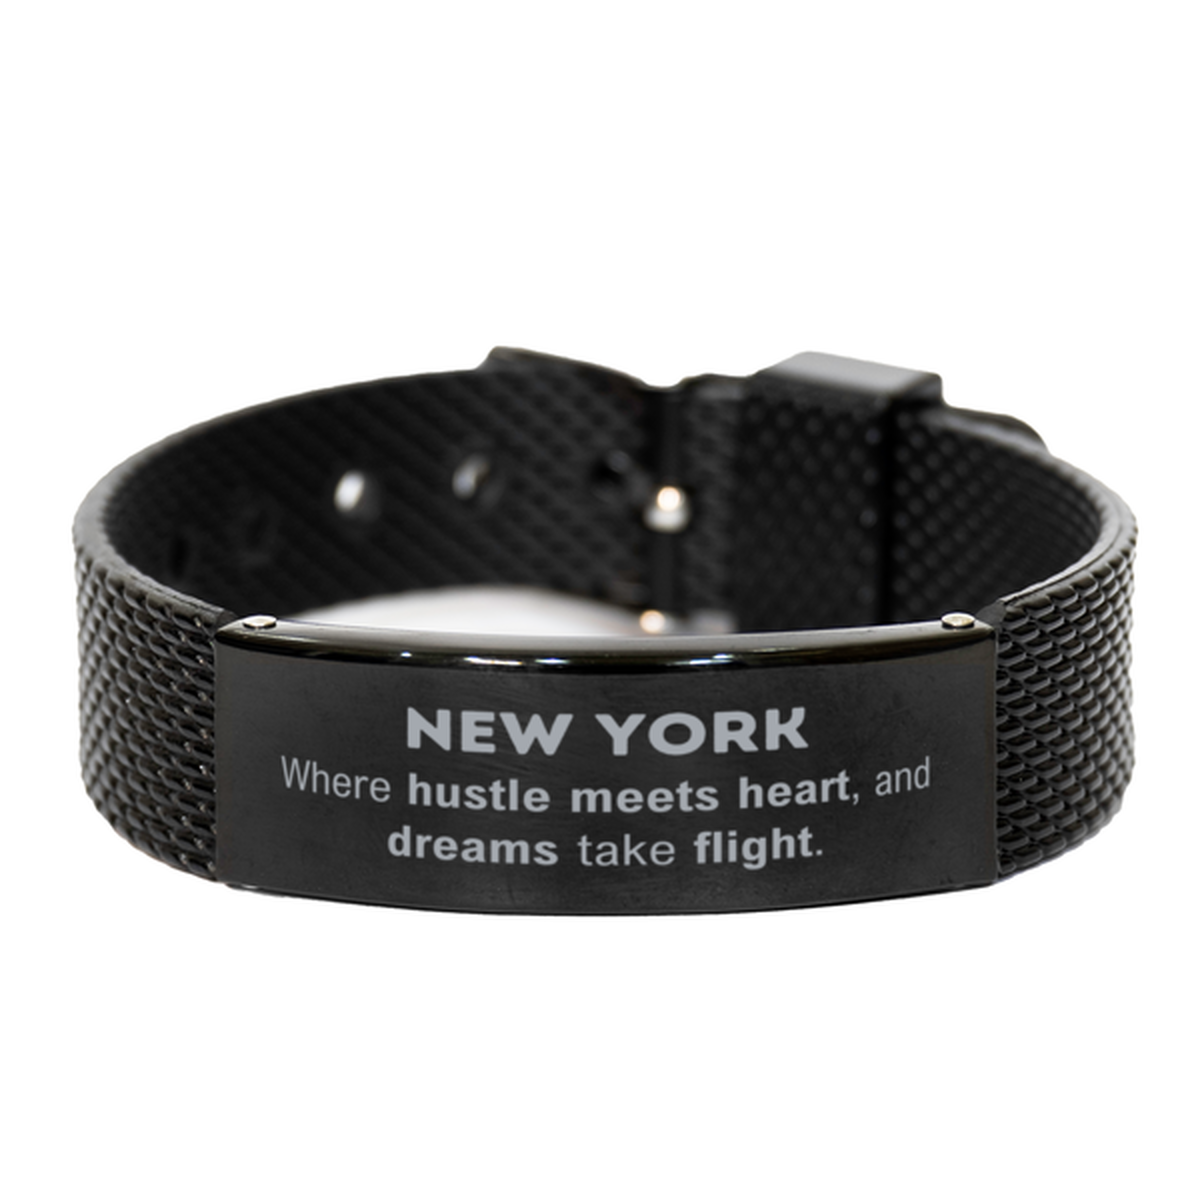 New York: Where hustle meets heart, and dreams take flight, New York Gifts, Proud New York Christmas Birthday New York Black Shark Mesh Bracelet, New York State People, Men, Women, Friends